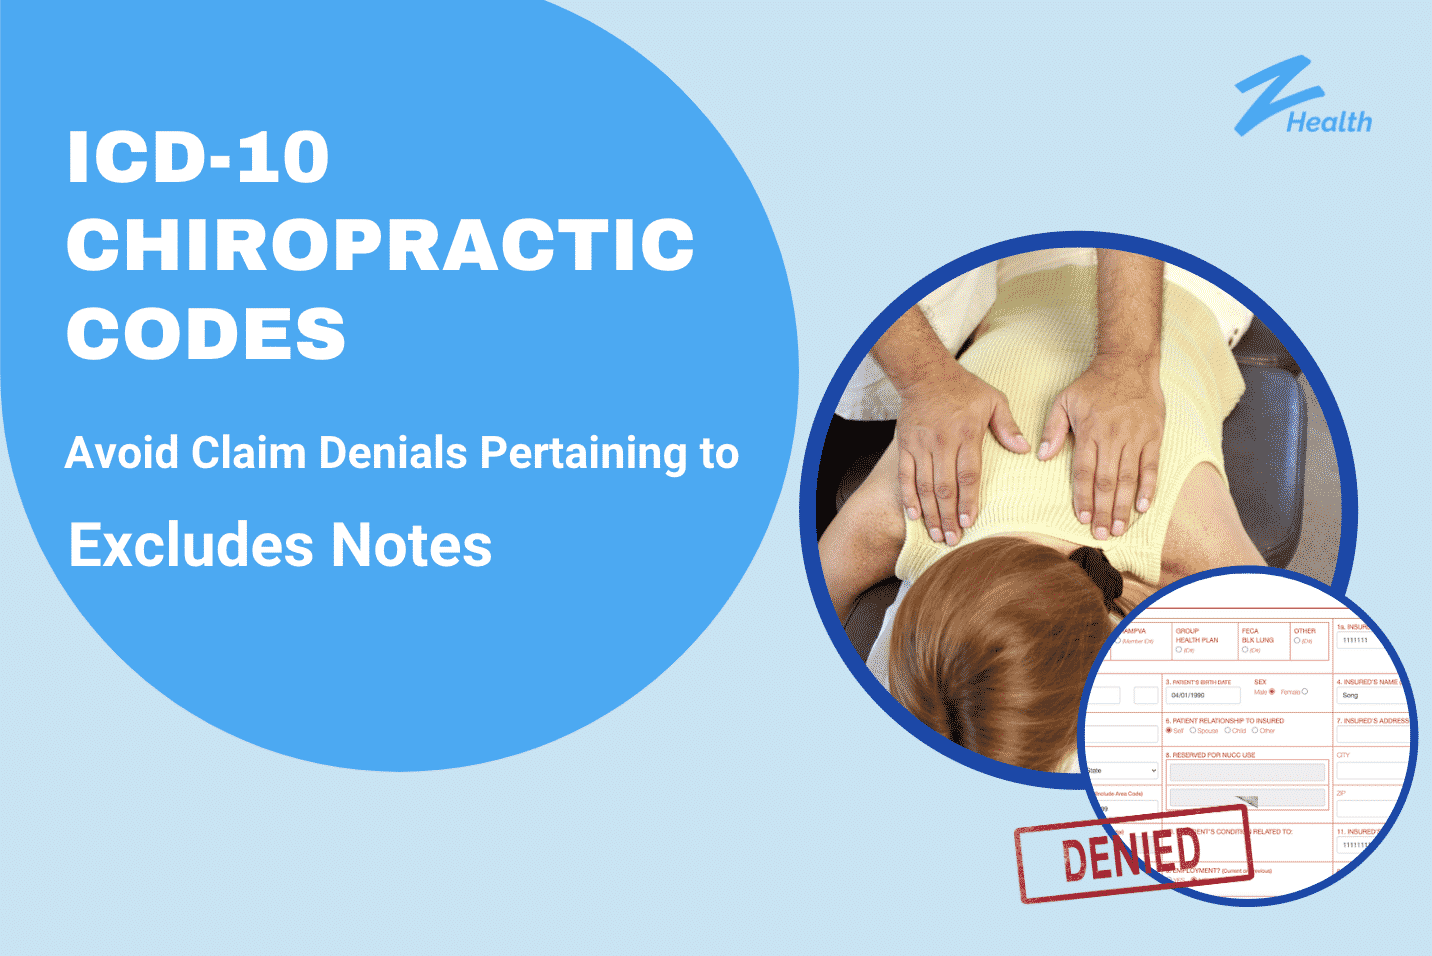 ICD-10 Chiropractic Codes: Avoid Claim Denials